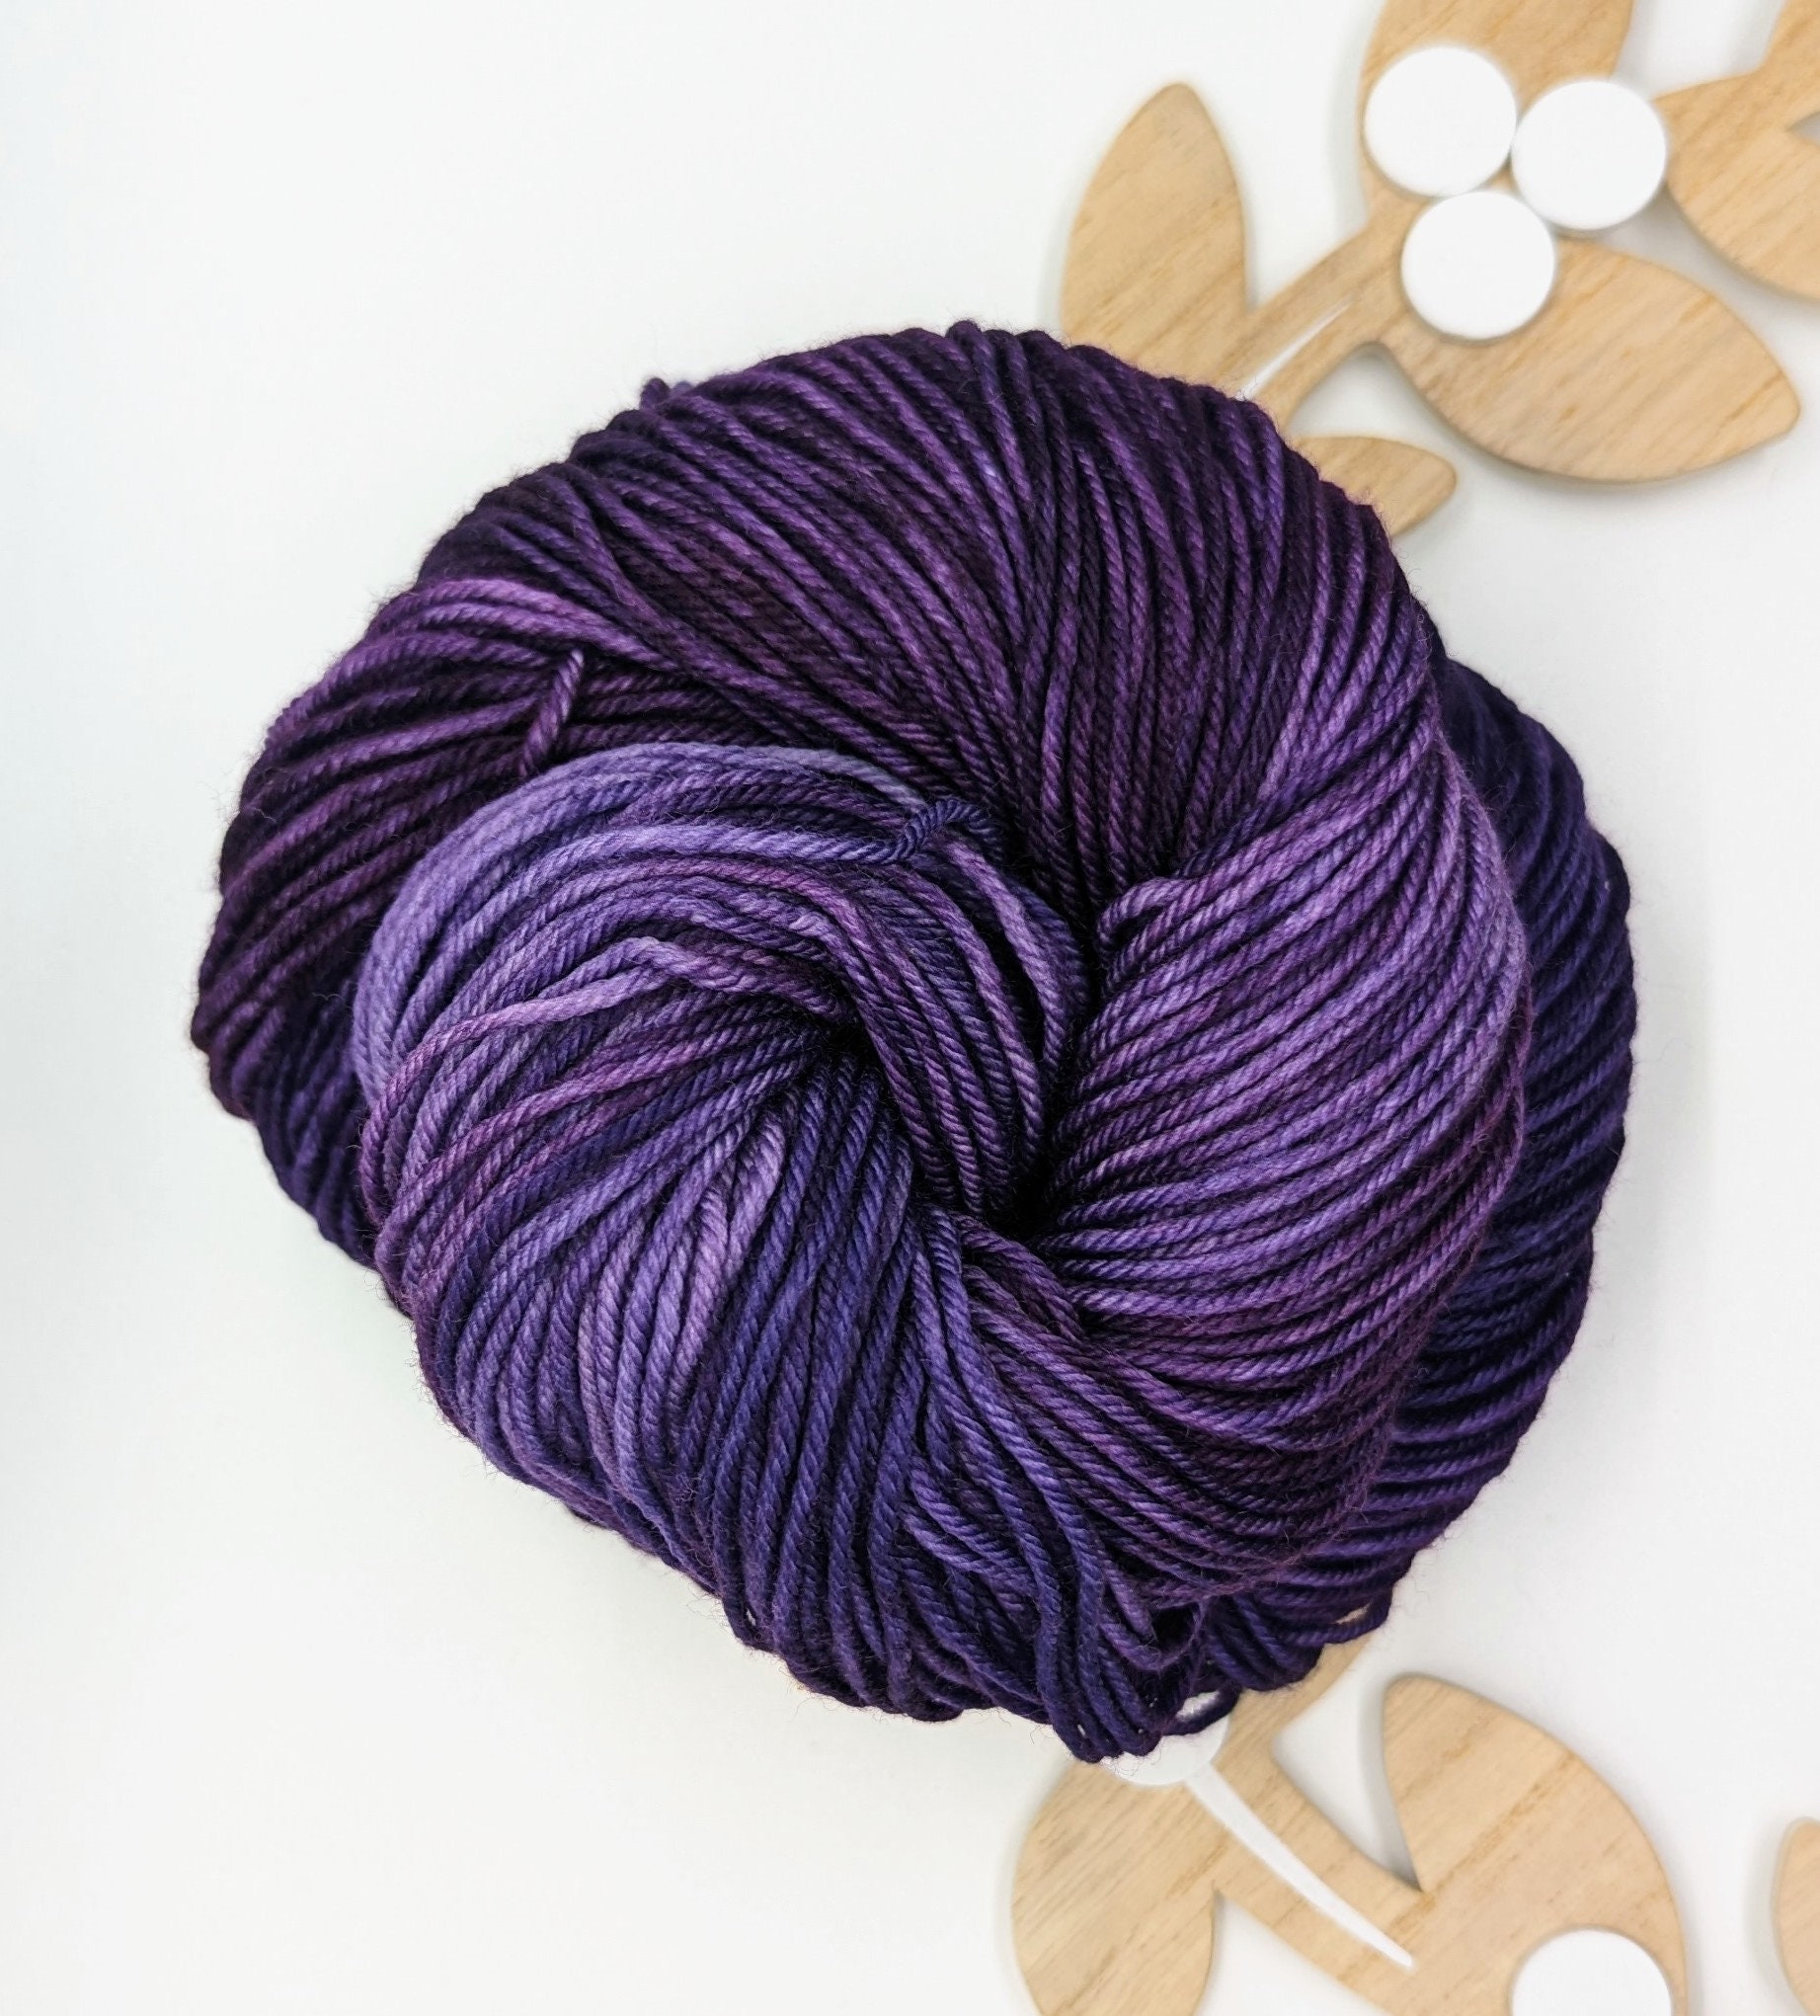 Clover Japan - Darning yarn - warm orange and purple tones